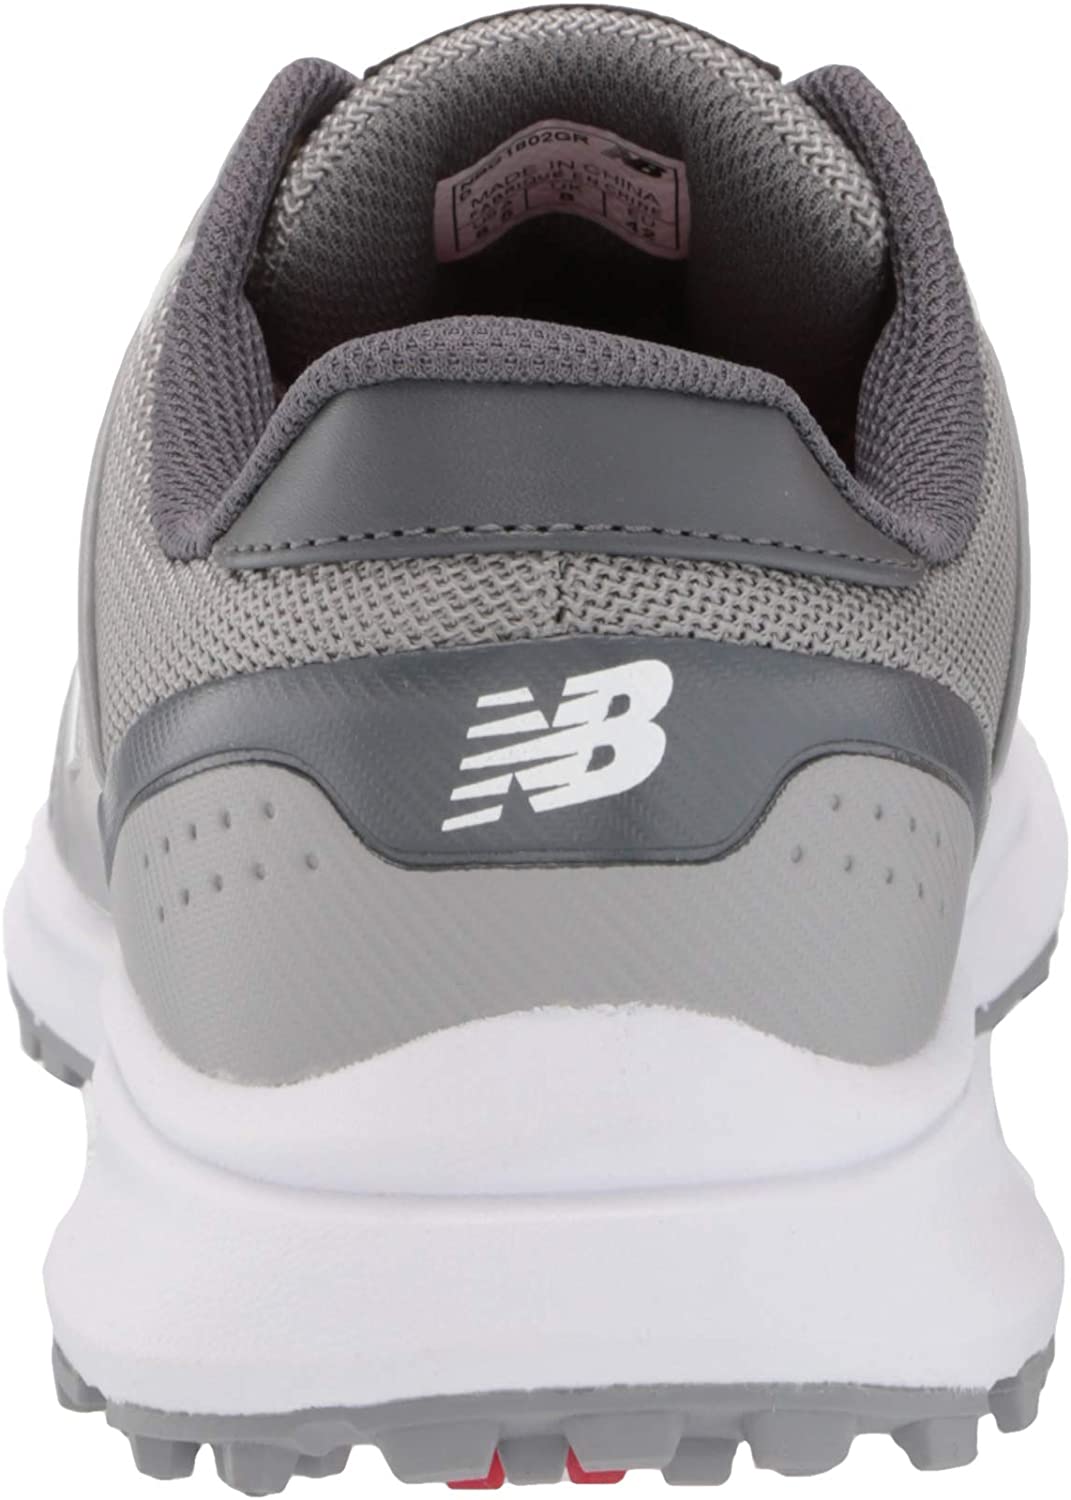 New Balance Breeze V2 NBG1802GR Grey Men Spikeless Golf Shoes - image 3 of 8